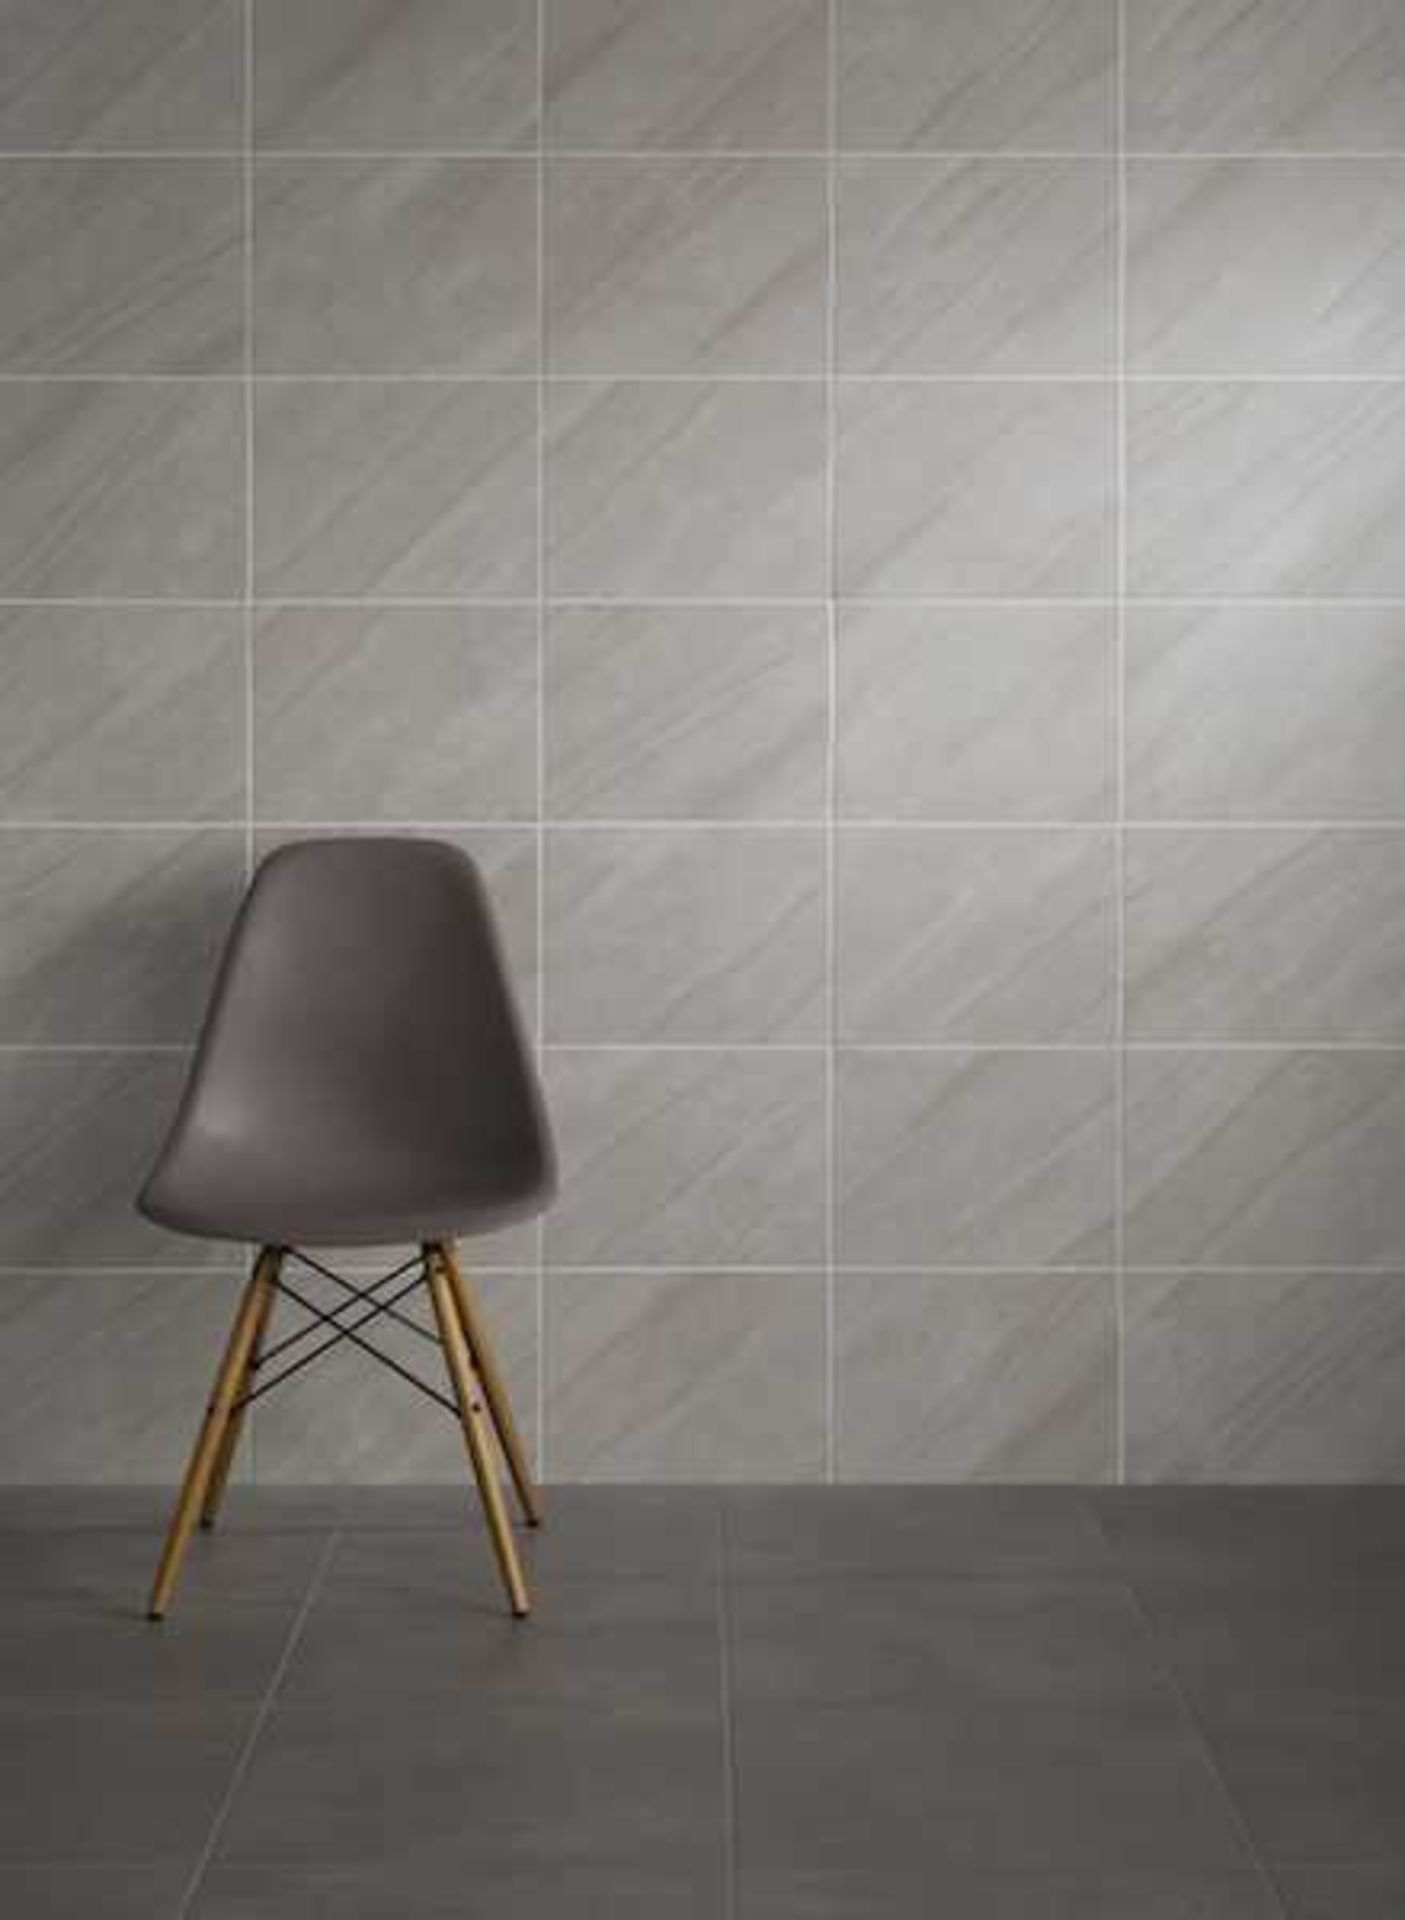 A pallet of 12x packs of 10 Johnsons Tiles 360x275mm Grassmere slate grey matt wall and floor tiles, - Image 2 of 3